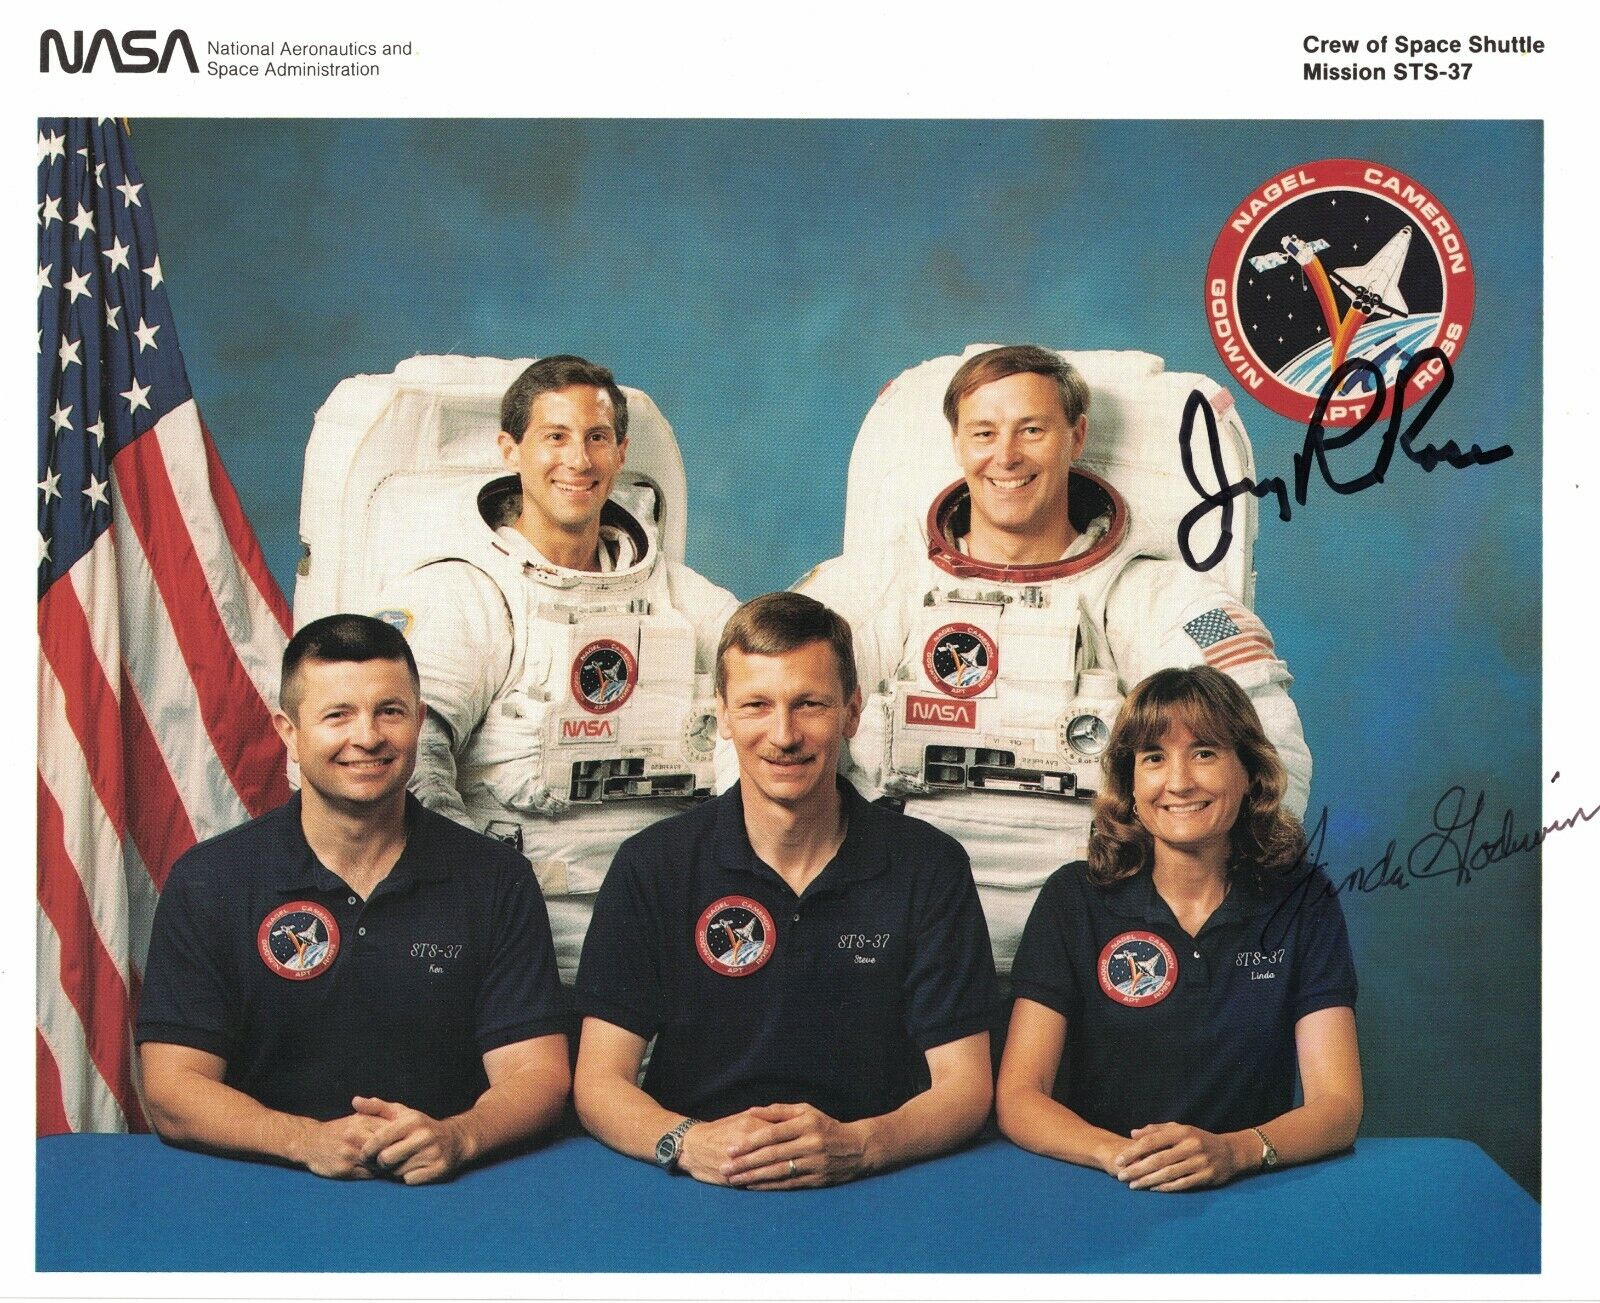 Jerry L. Ross & Linda Godwin Dual Signed Autographed 8x10 Photo Poster painting NASA Astronaut